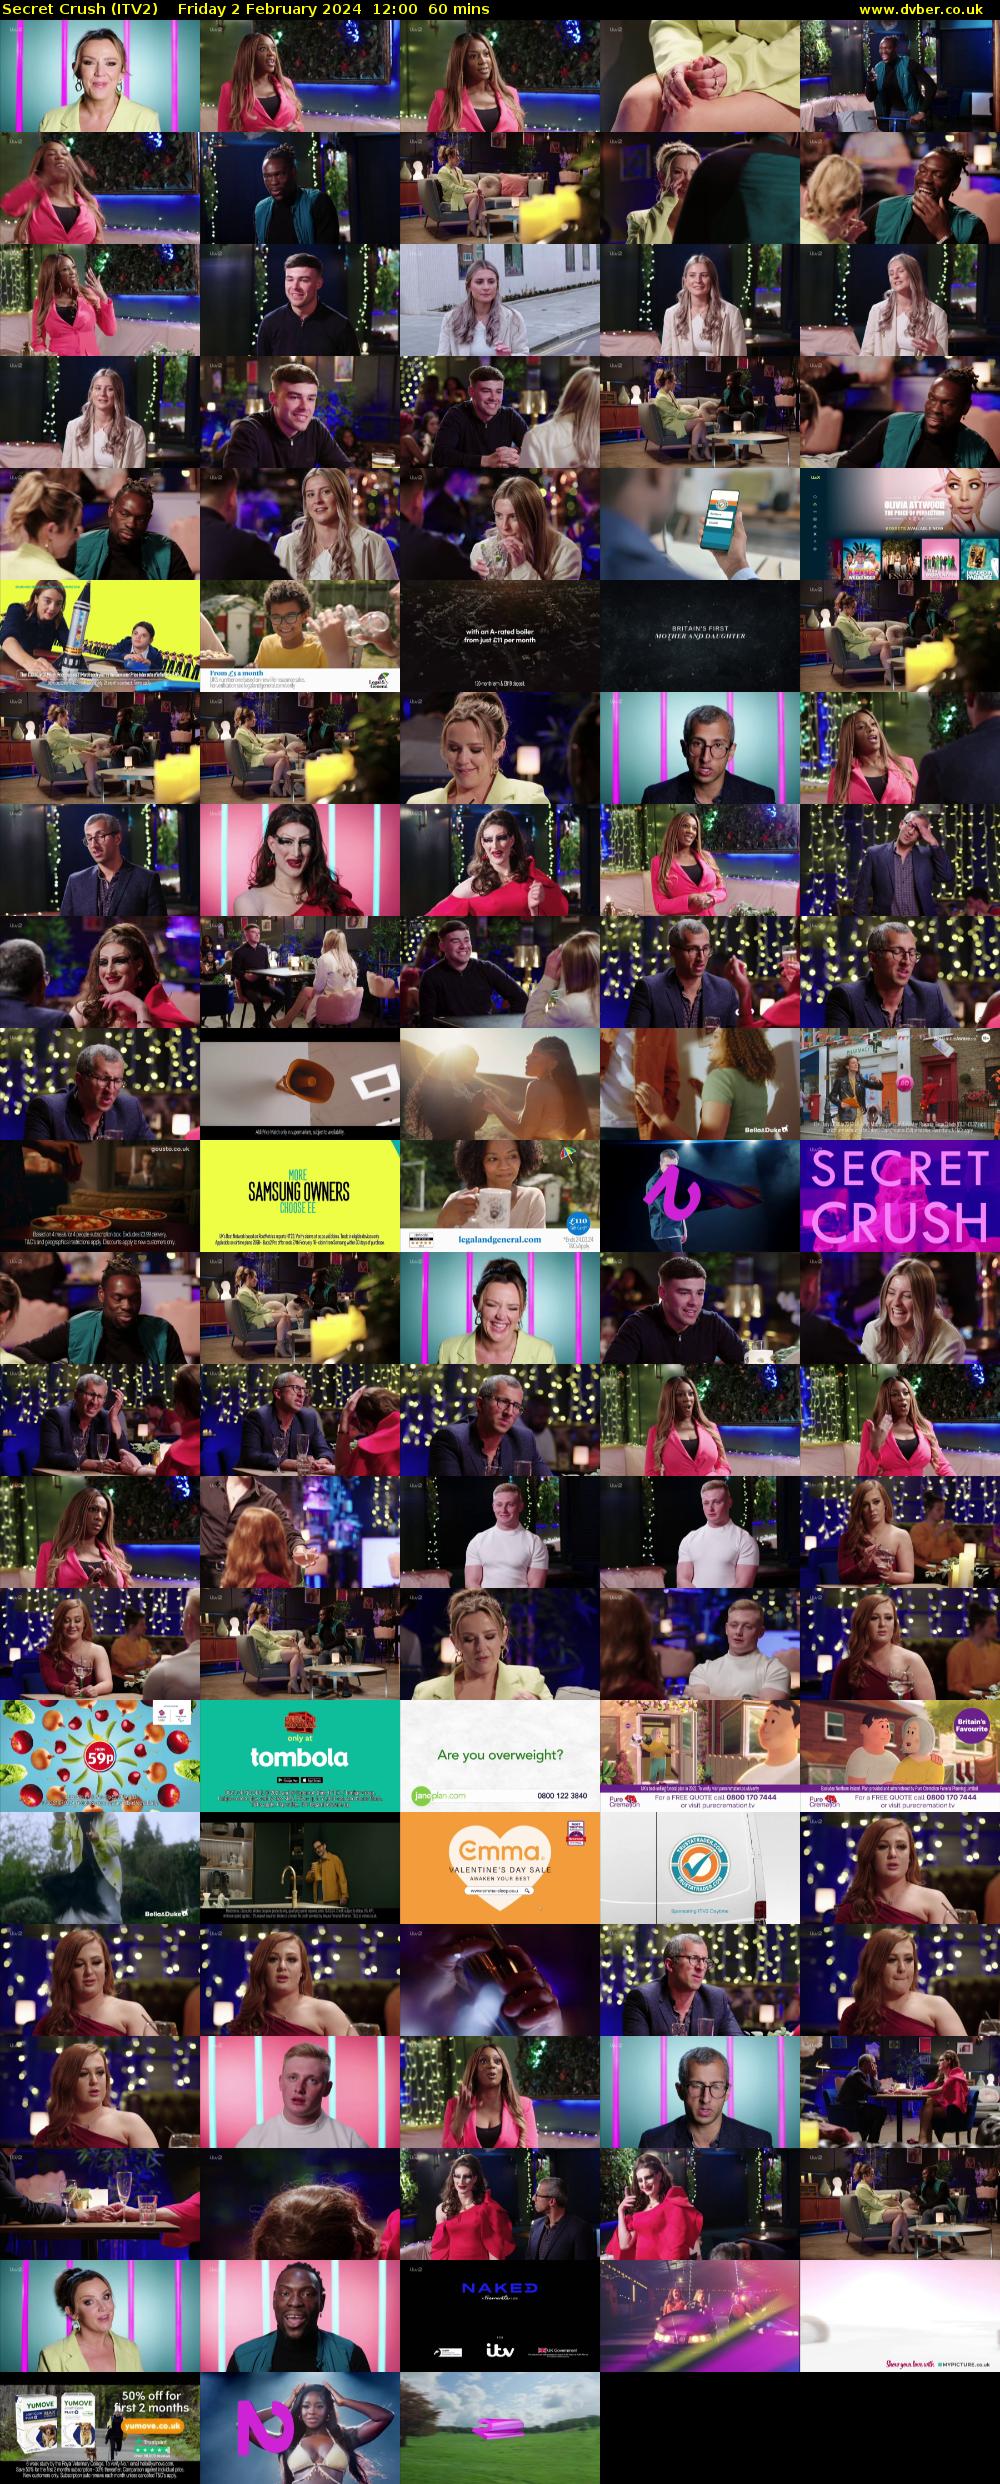 Secret Crush (ITV2) Friday 2 February 2024 12:00 - 13:00